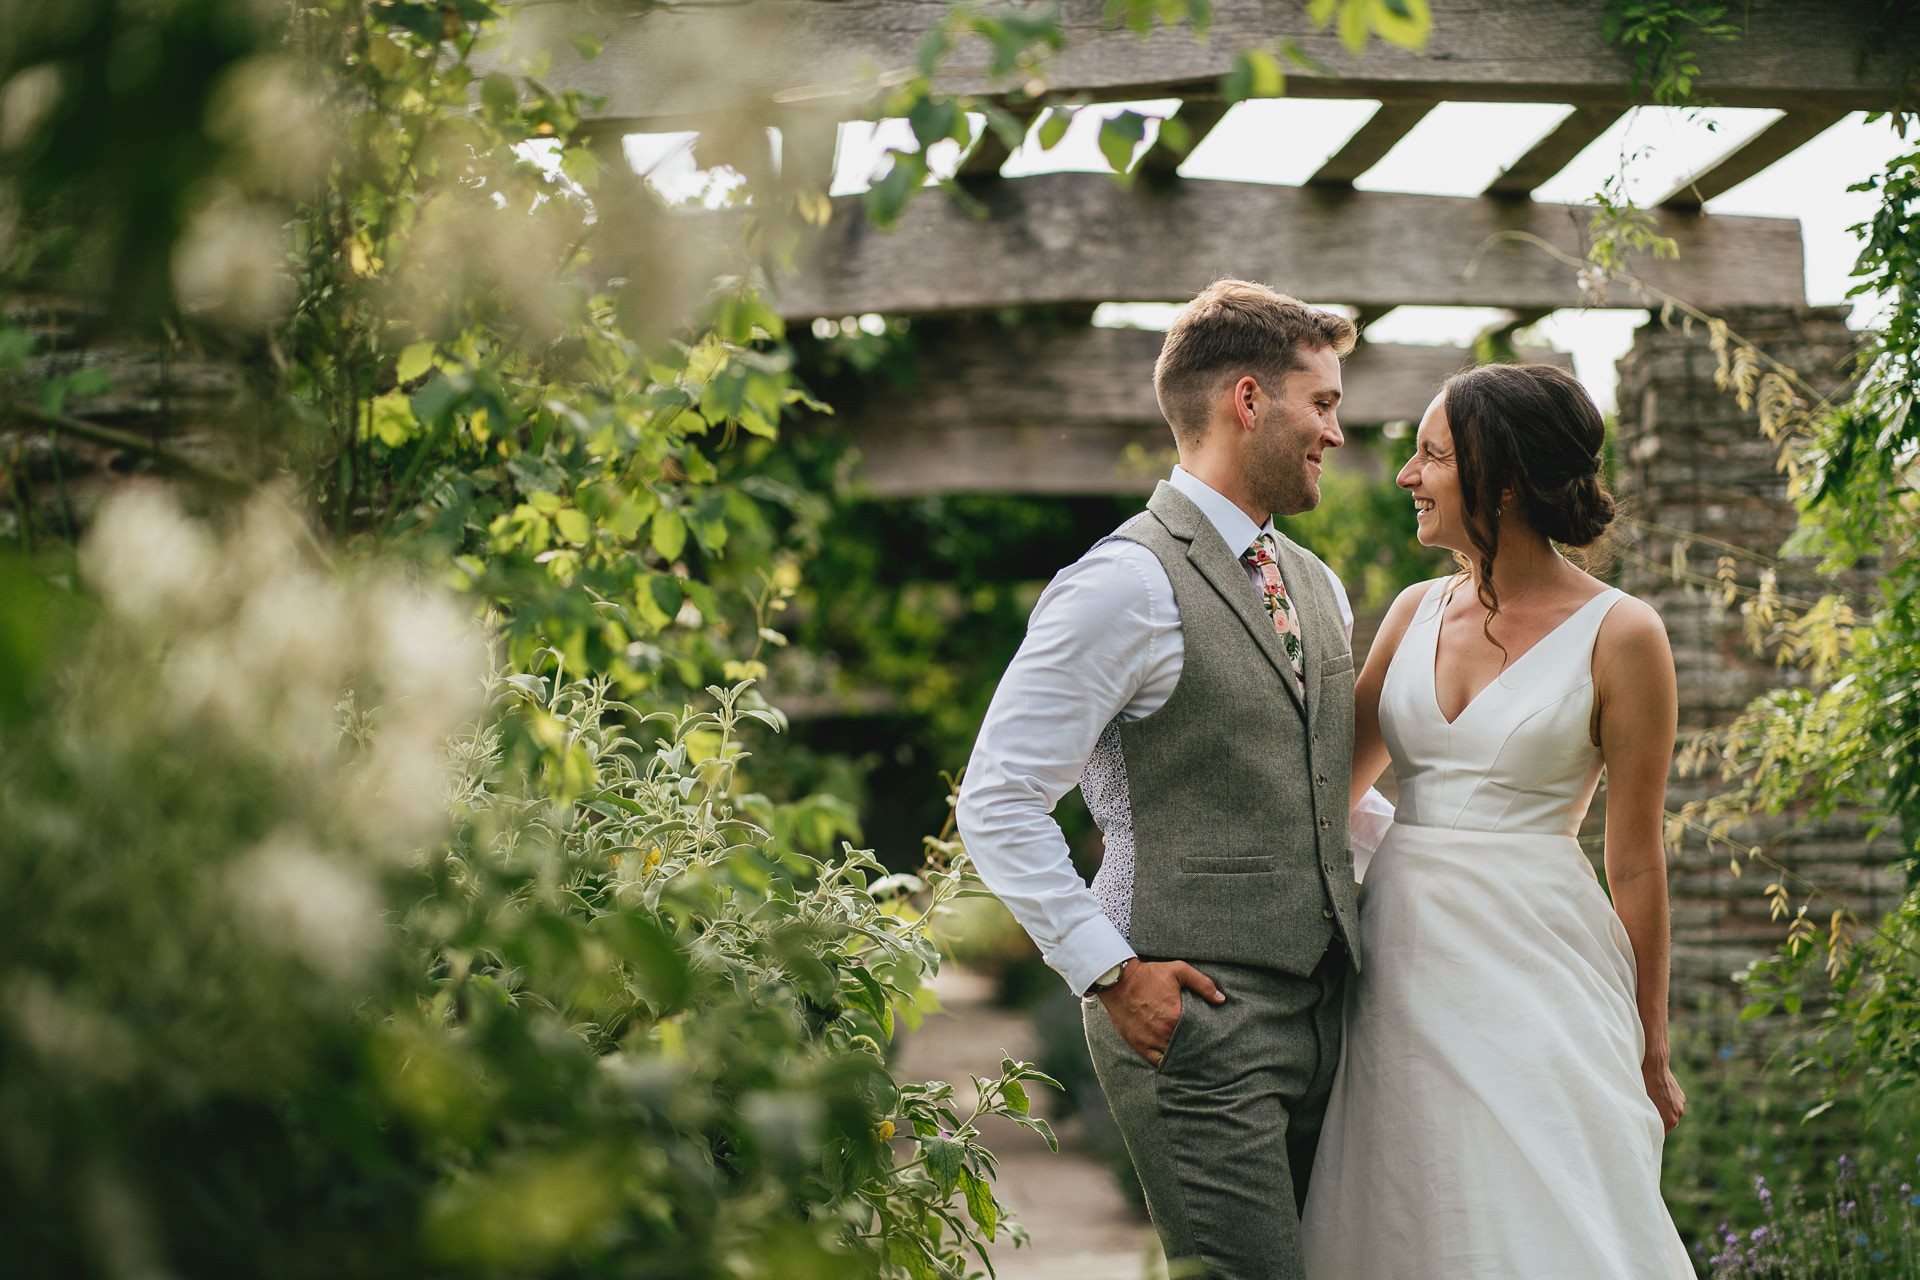 A bride and groom cuddling in beautiful gardens